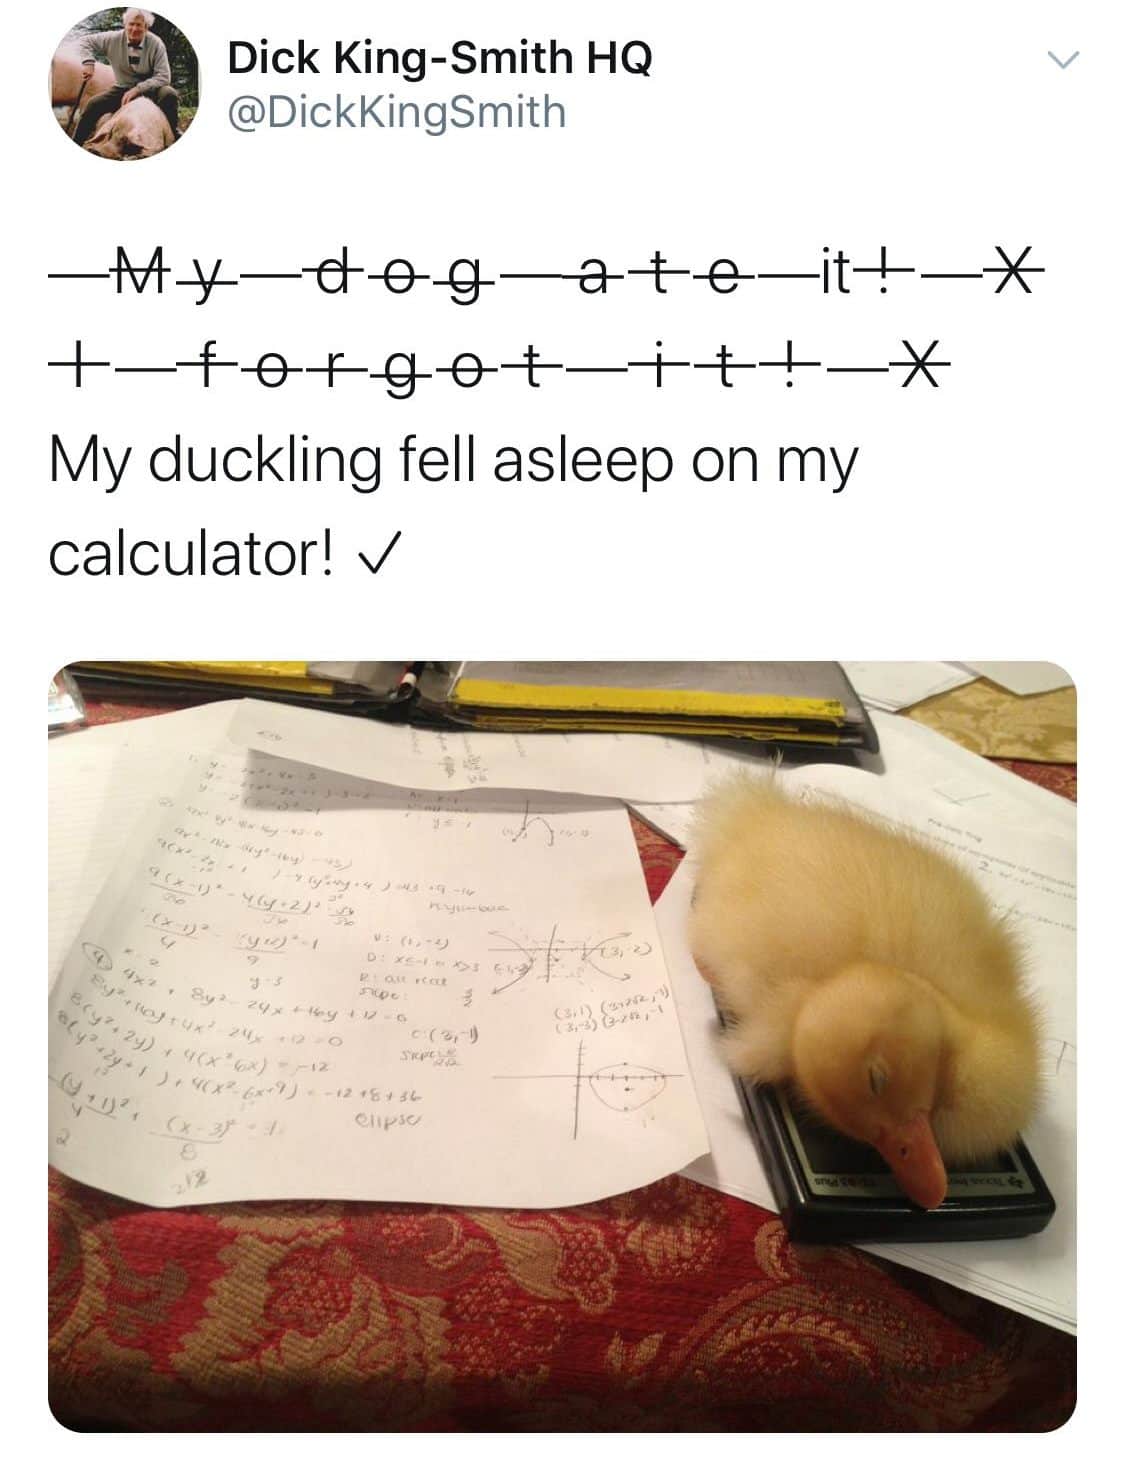 duck fell asleep on my calculator - Dick KingSmith Hq 4686xx 12 18136 Patra C2,0 Onpsc Mtogateit orgotit My duckling fell asleep on my calculator! fo Bryz24